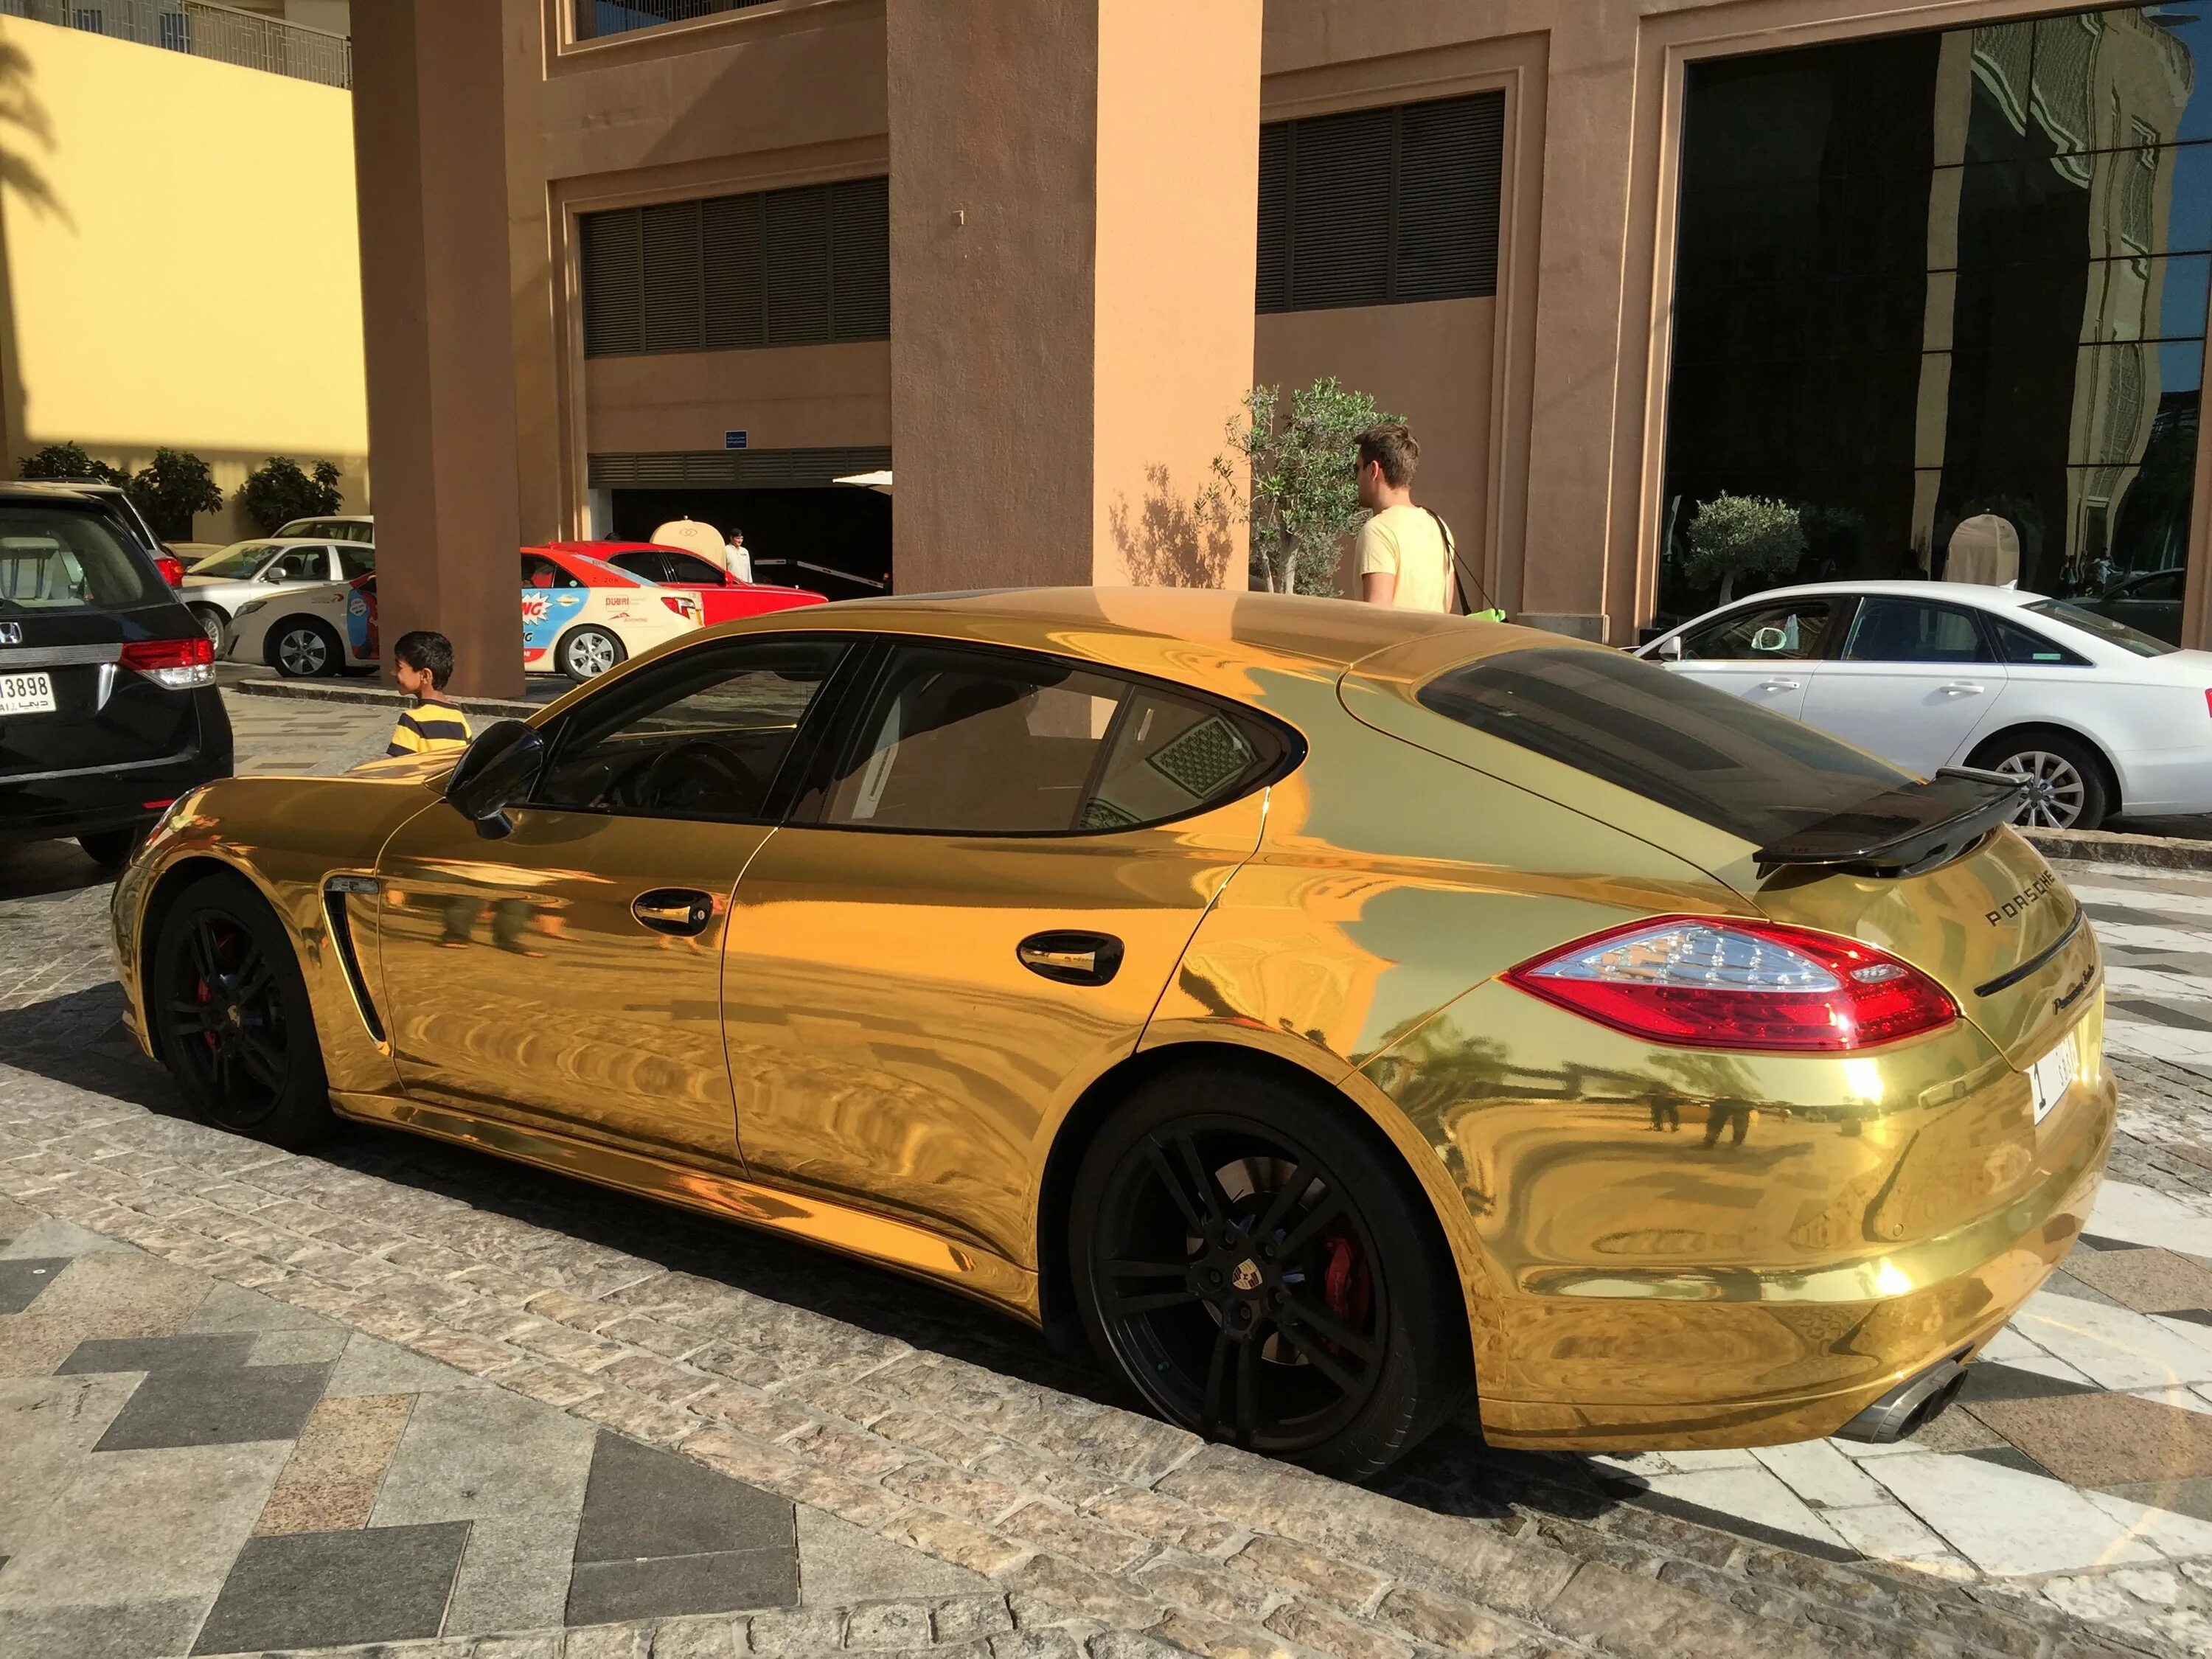 Gold car. Порше Панамера золотистый. Порше Панамера в золоте. Порше Панамера золотой цвет. Porsche Panamera Gold 1080.